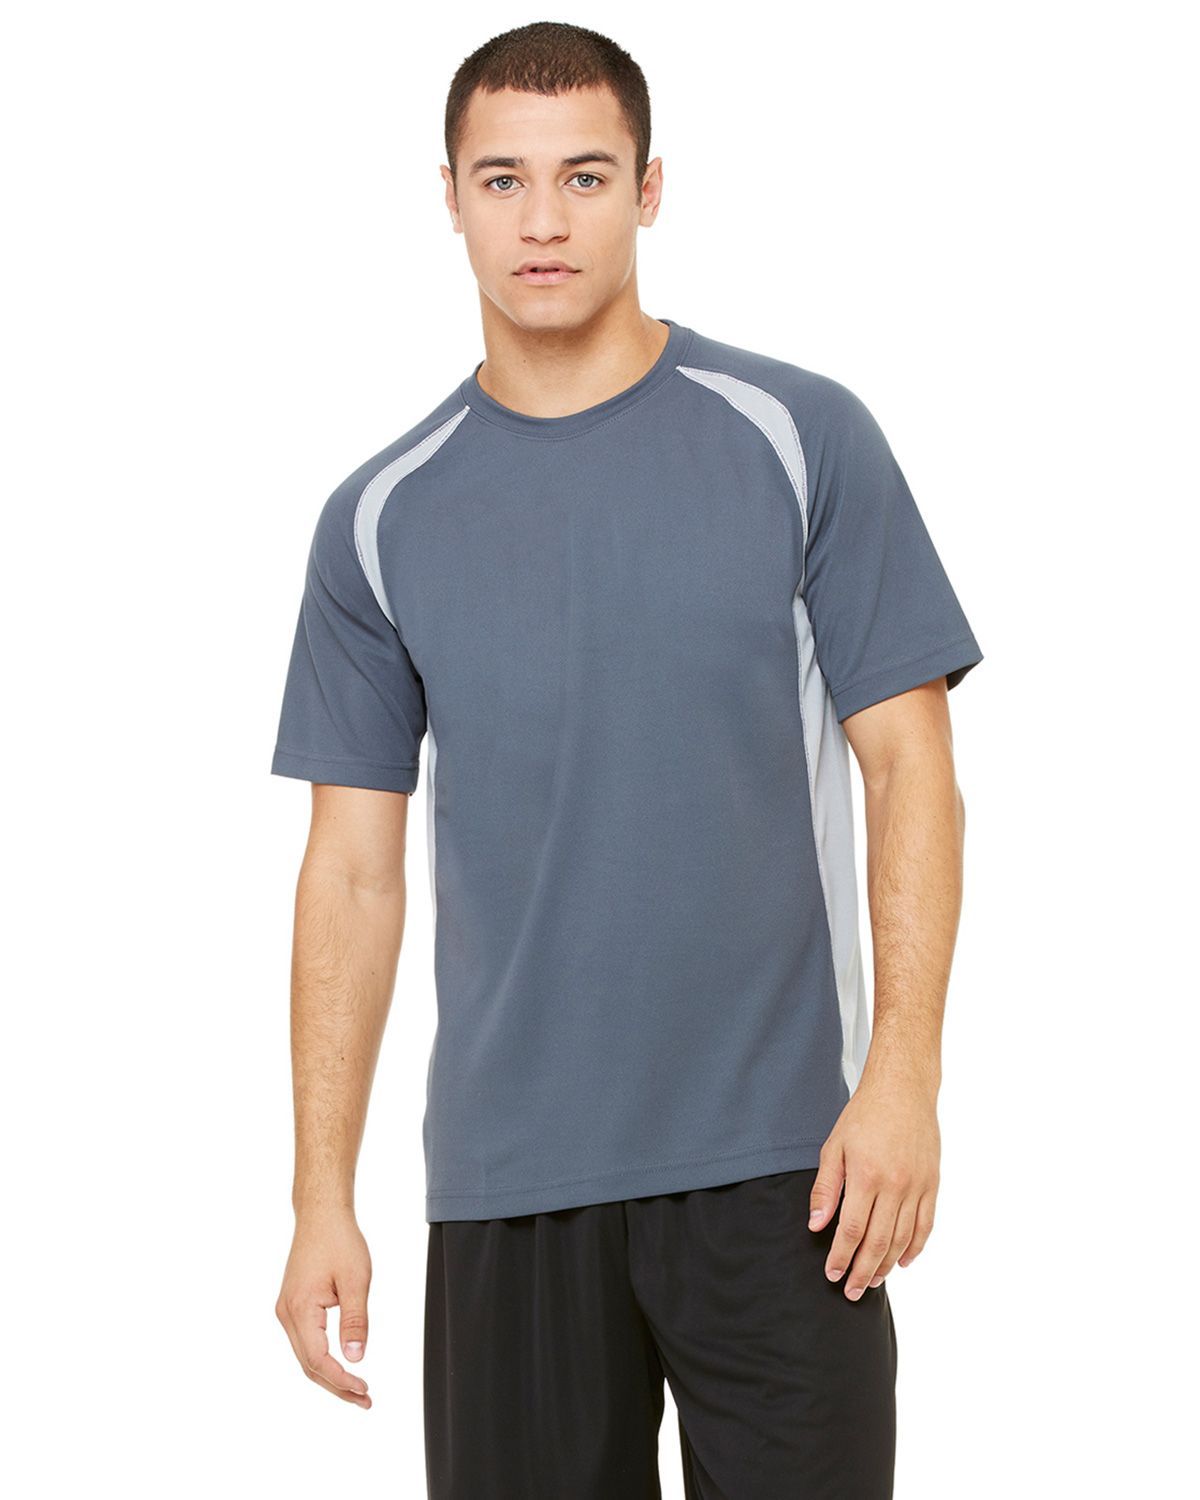 All Sport M1004 Men’s 4.3 oz. Short-Sleeve Colorblocked Crew T-Shirt